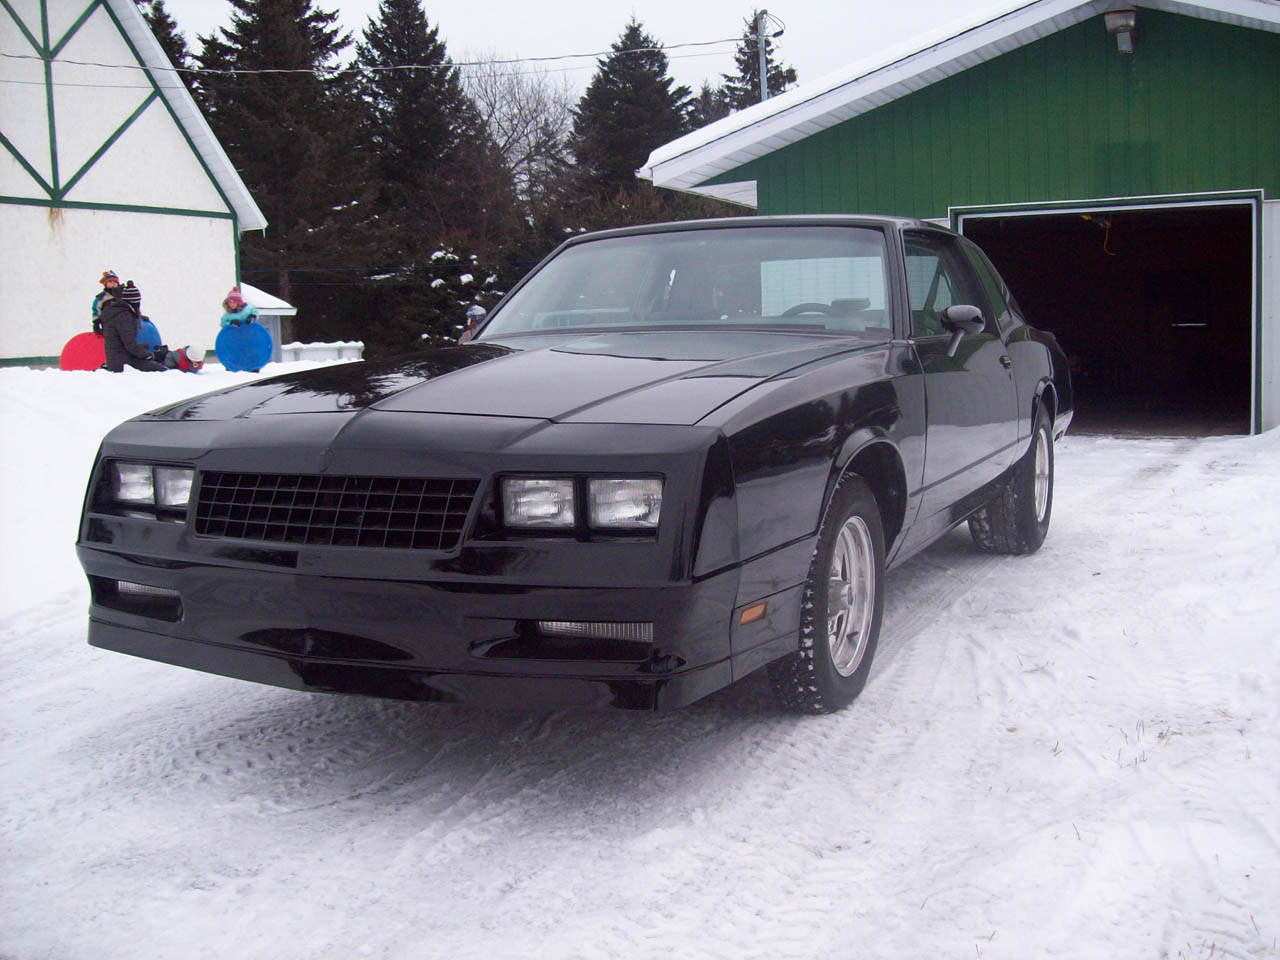  1985 Chevrolet Monte Carlo ss